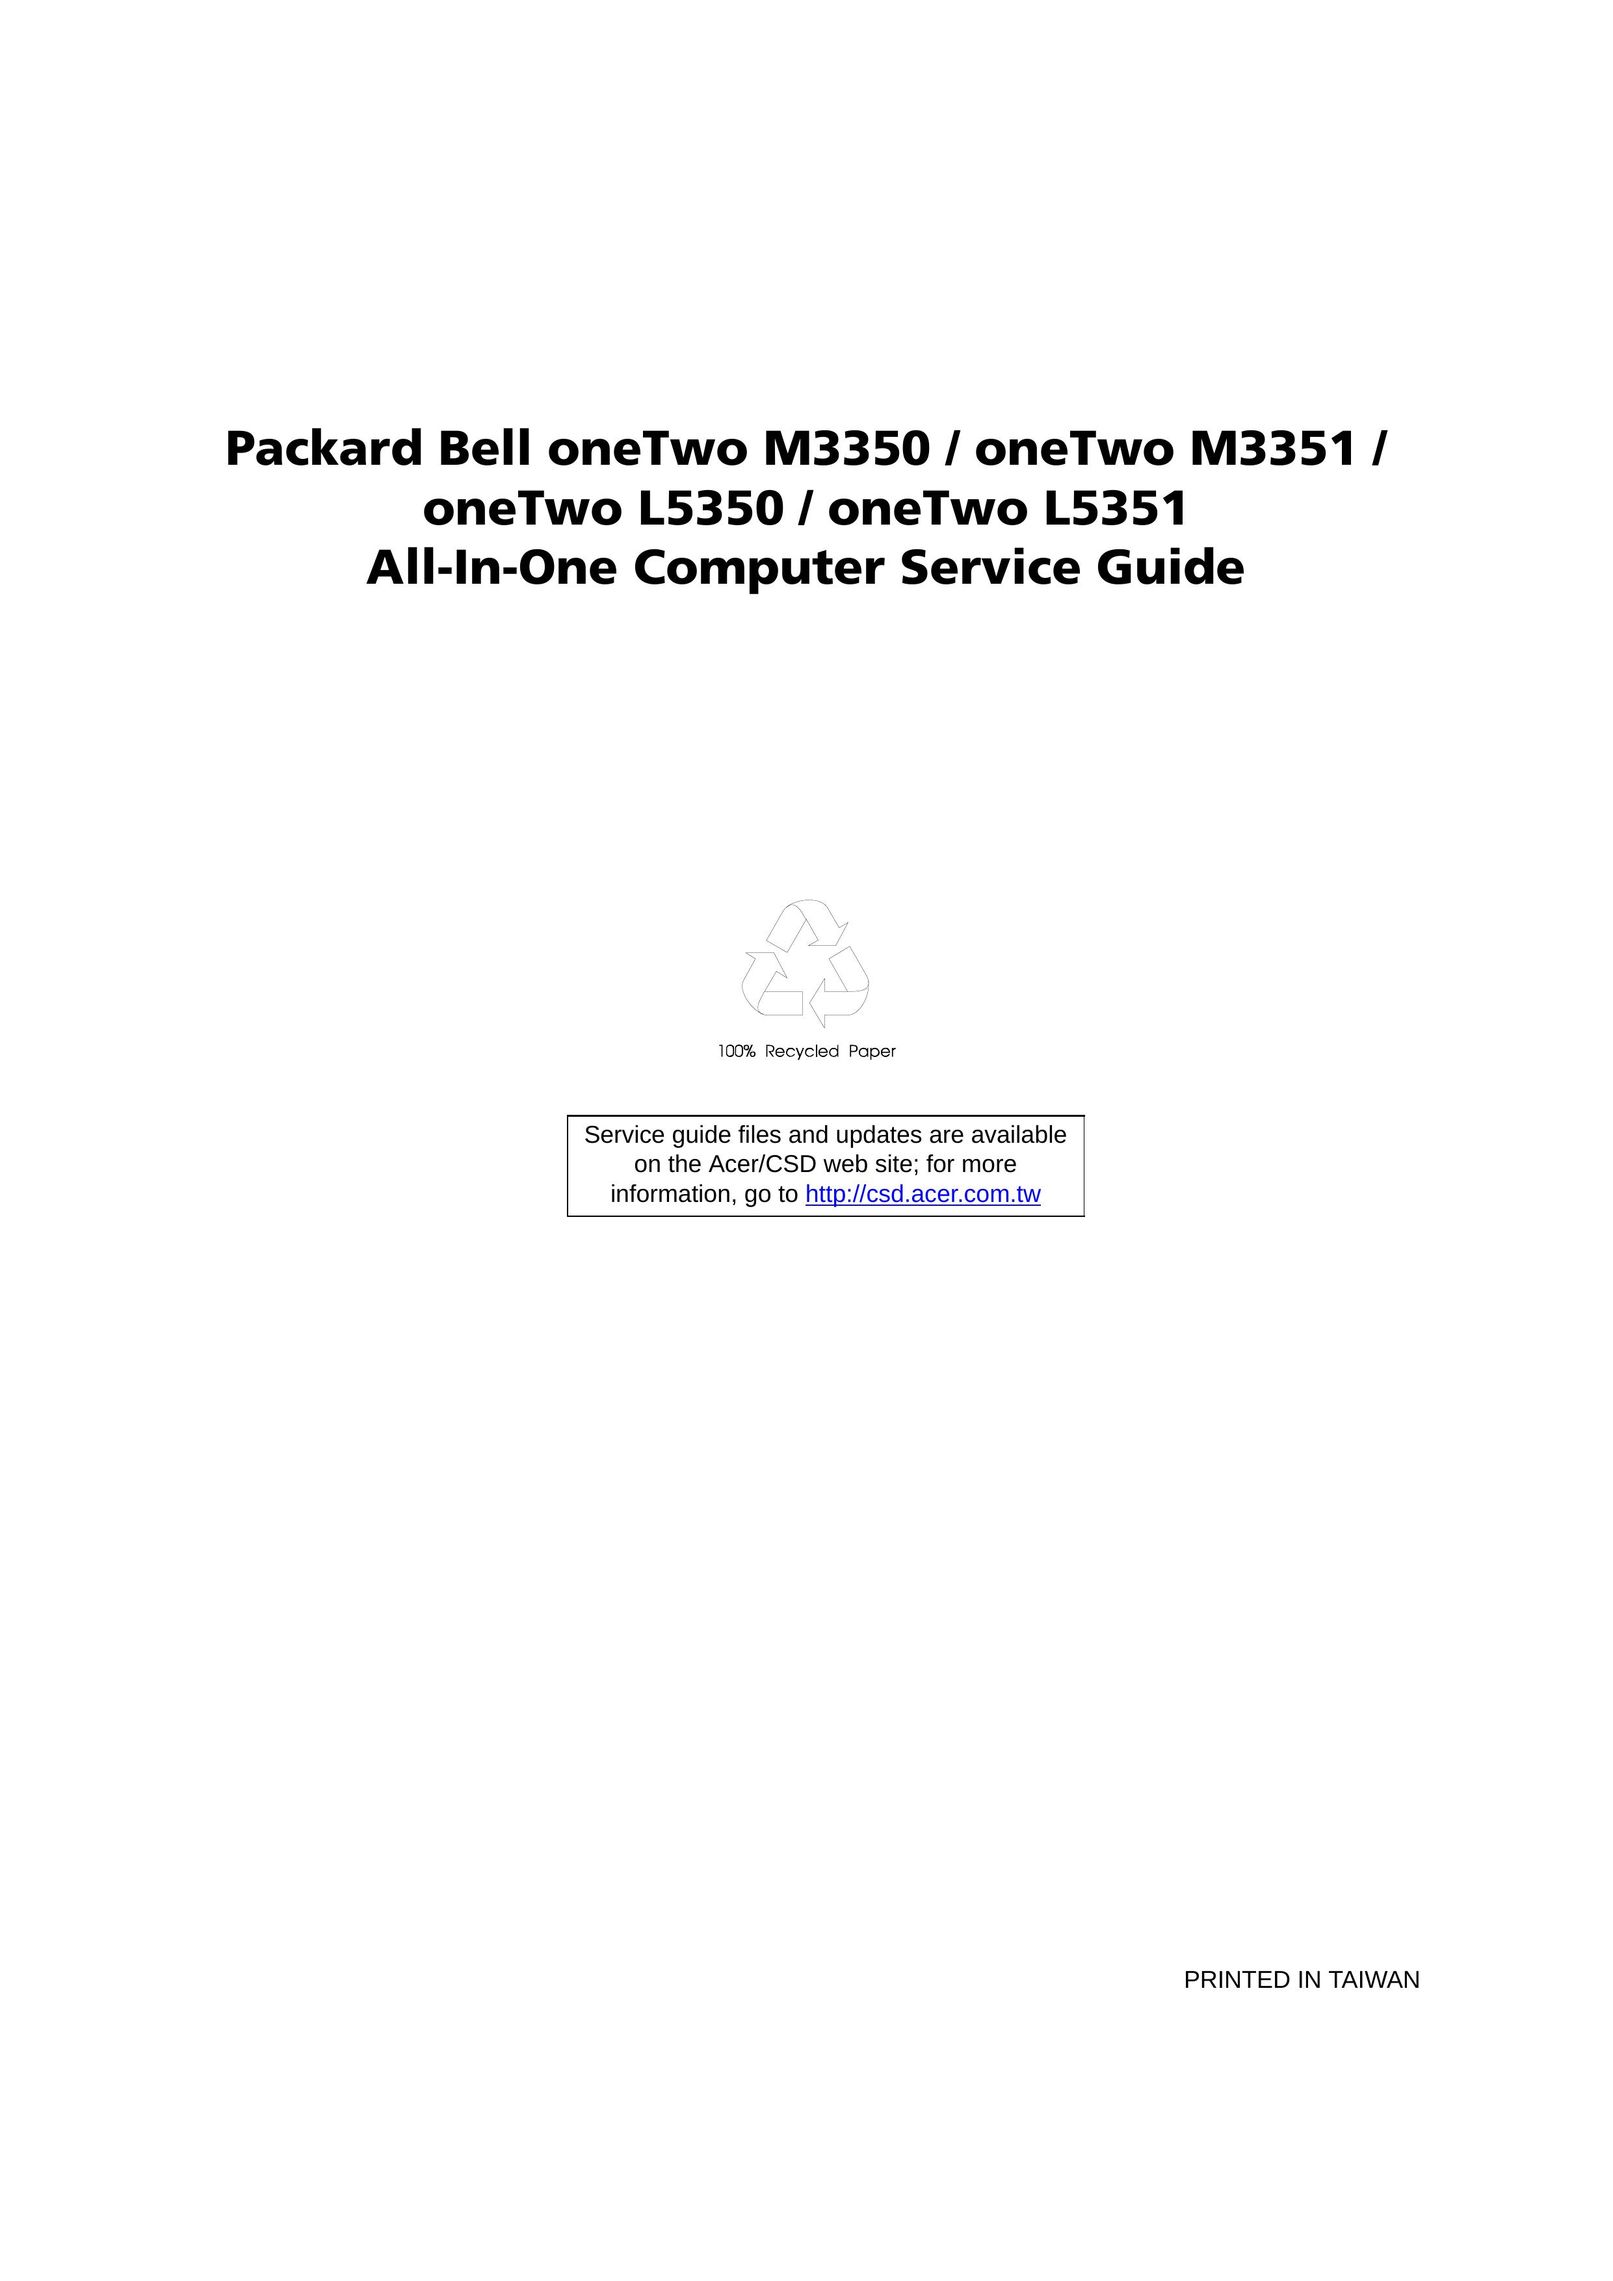 Packard Bell M3350 Personal Computer User Manual